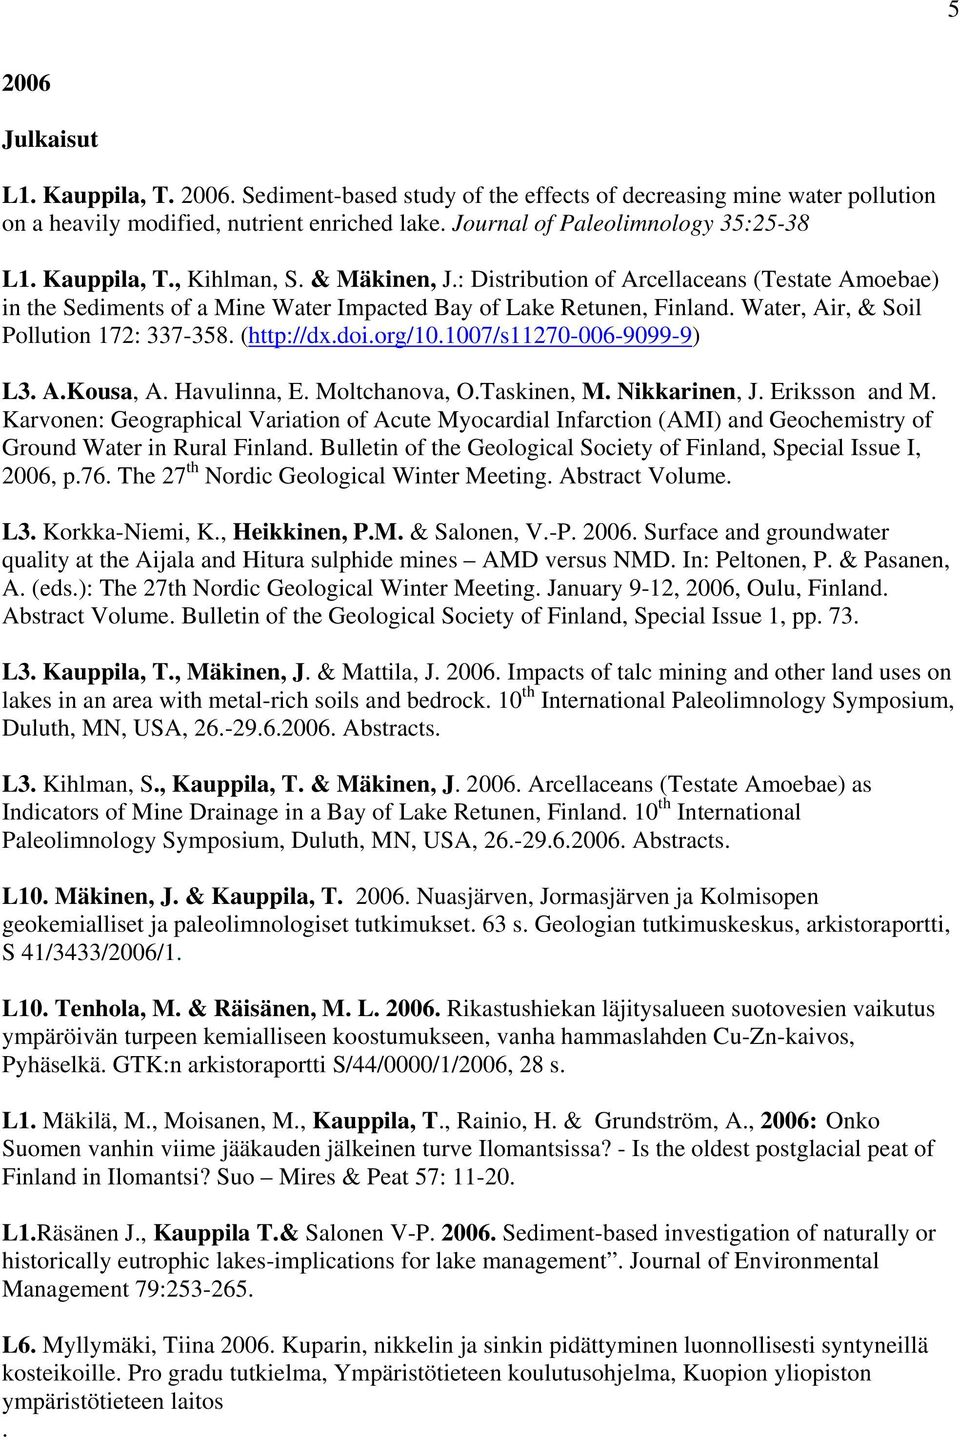 Water, Air, & Soil Pollution 172: 337-358. (http://dx.doi.org/10.1007/s11270-006-9099-9) L3. A.Kousa, A. Havulinna, E. Moltchanova, O.Taskinen, M. Nikkarinen, J. Eriksson and M.